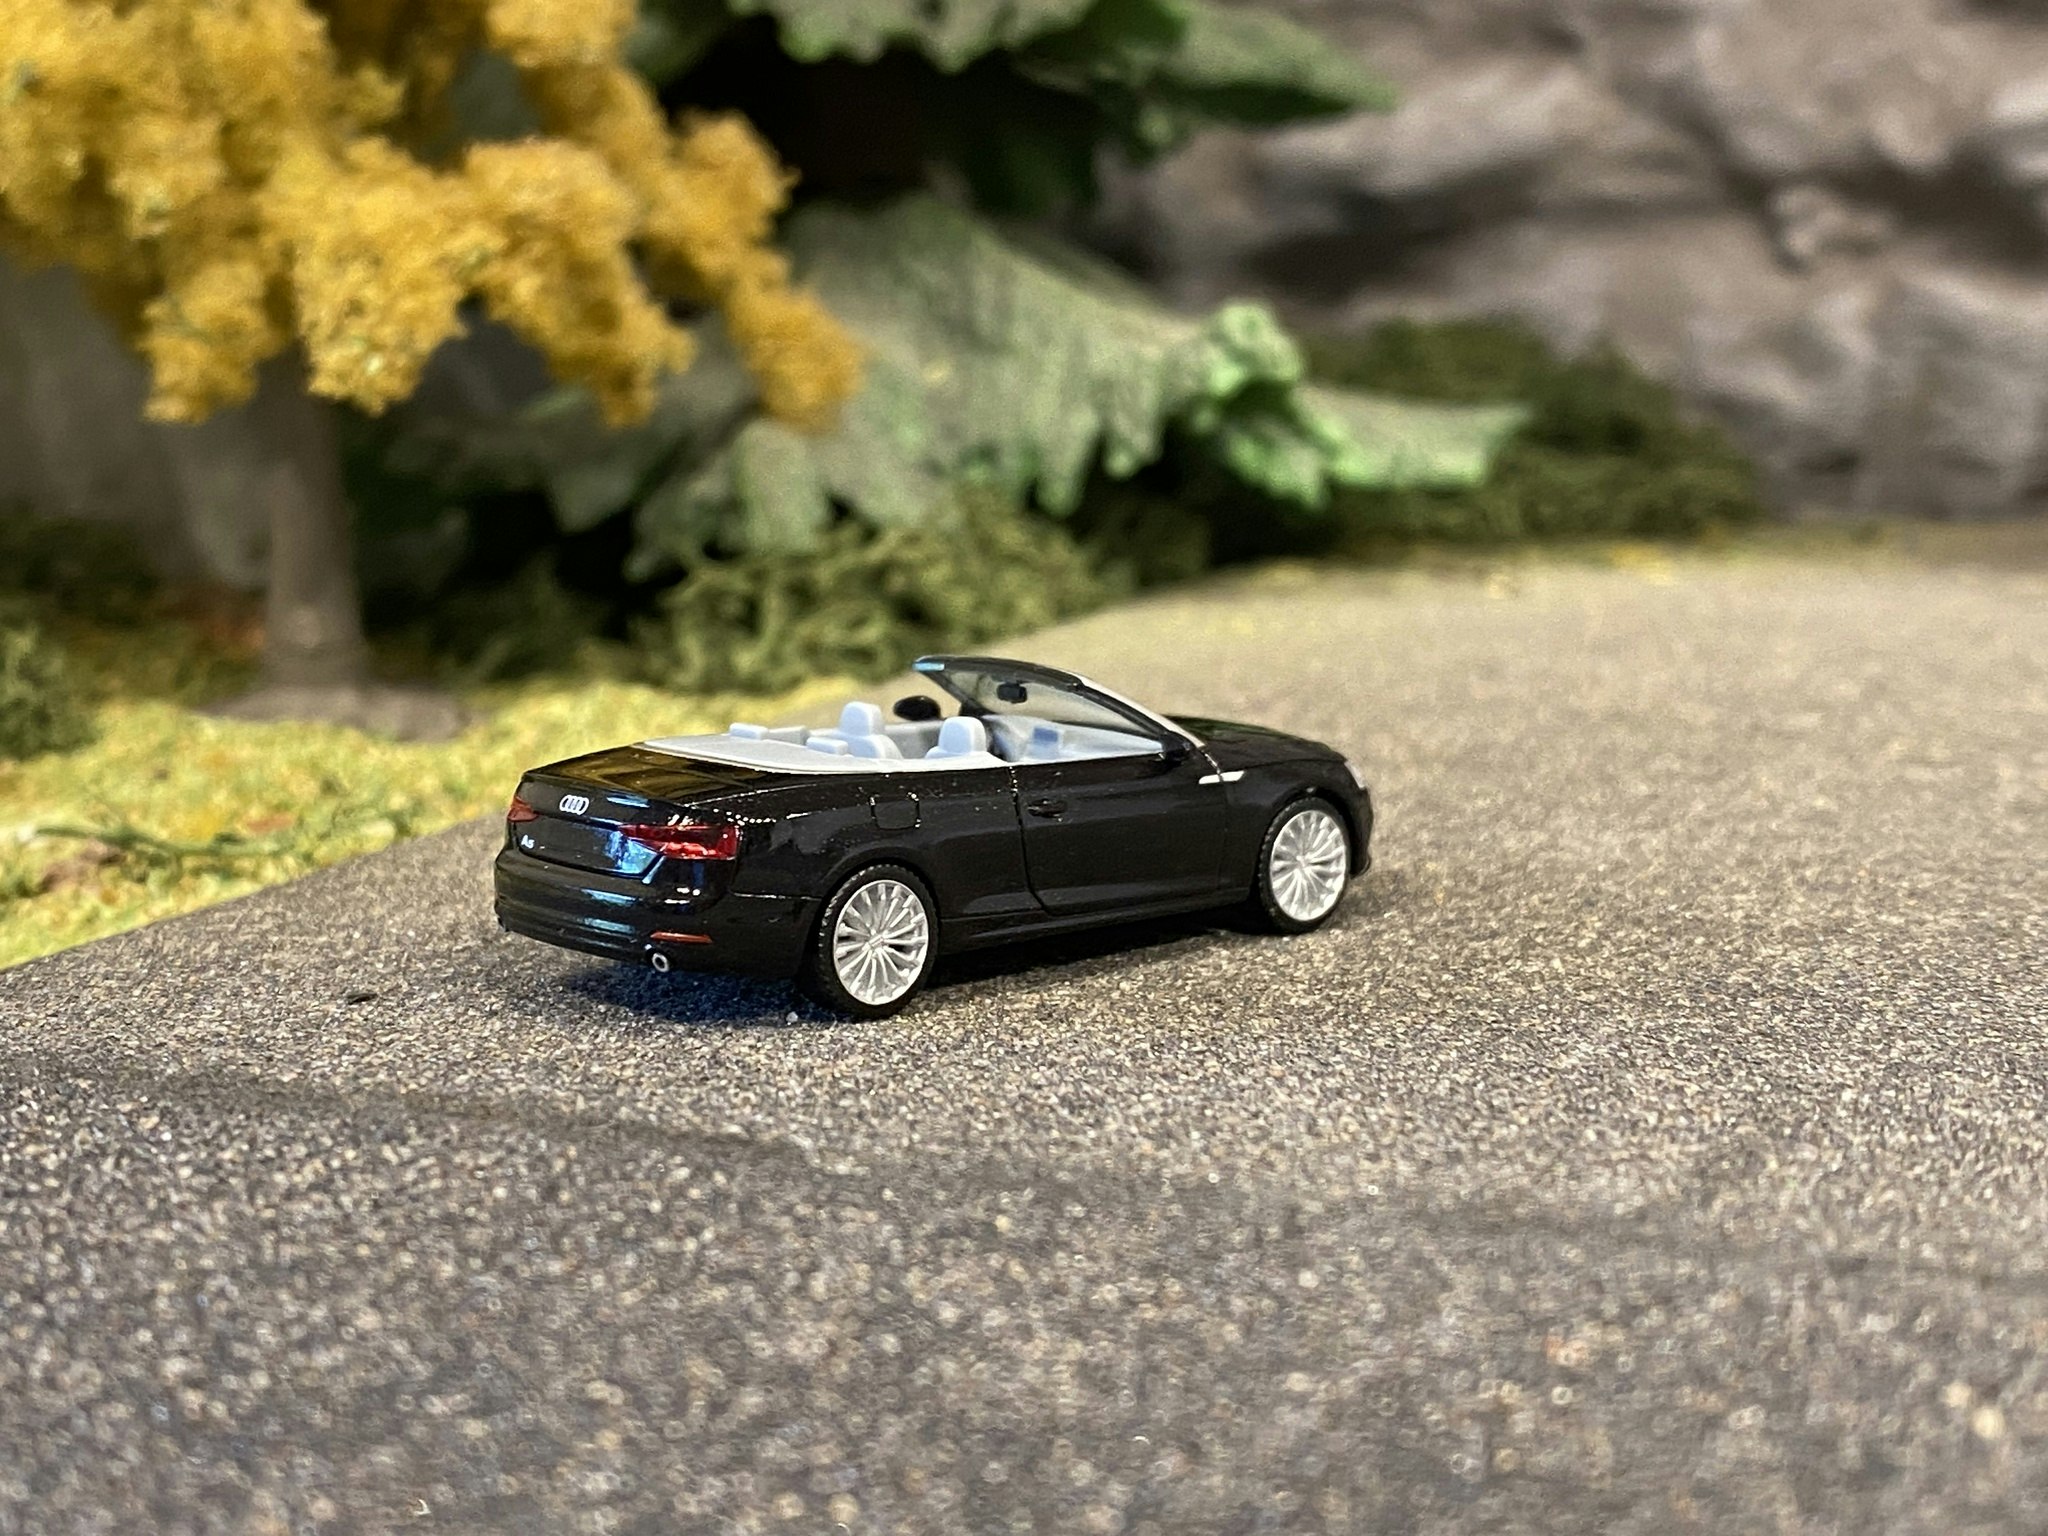 Skala 1/87 h0, Audi A5 Cab från HERPA